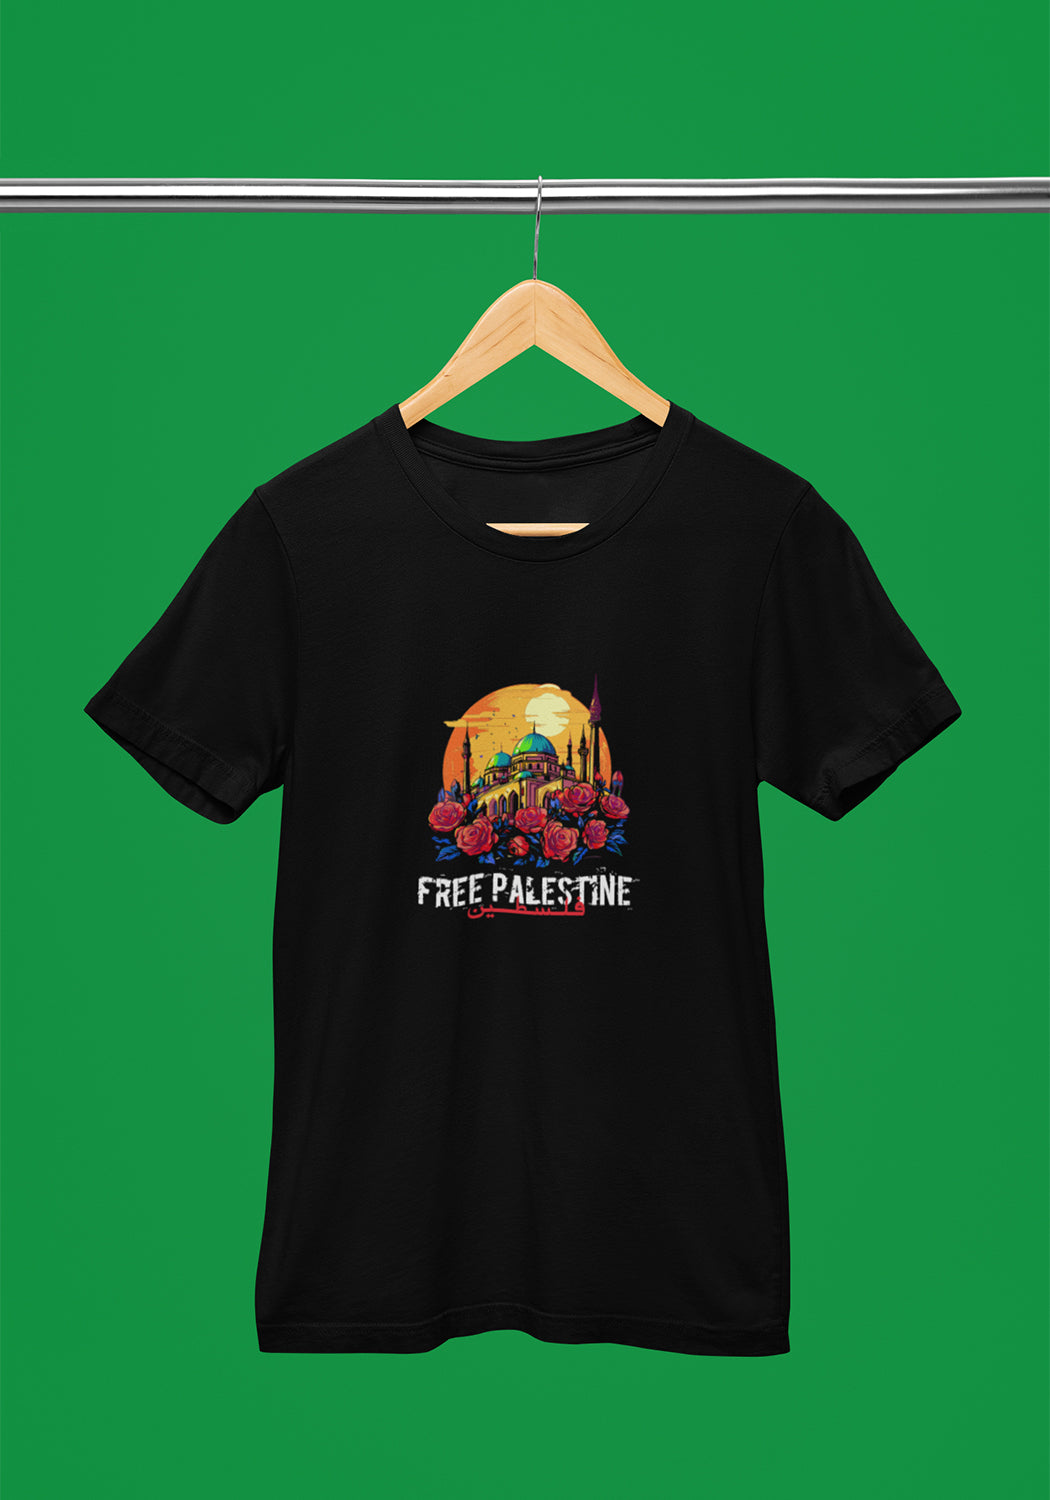 Free Palestine Printed T-Shirt